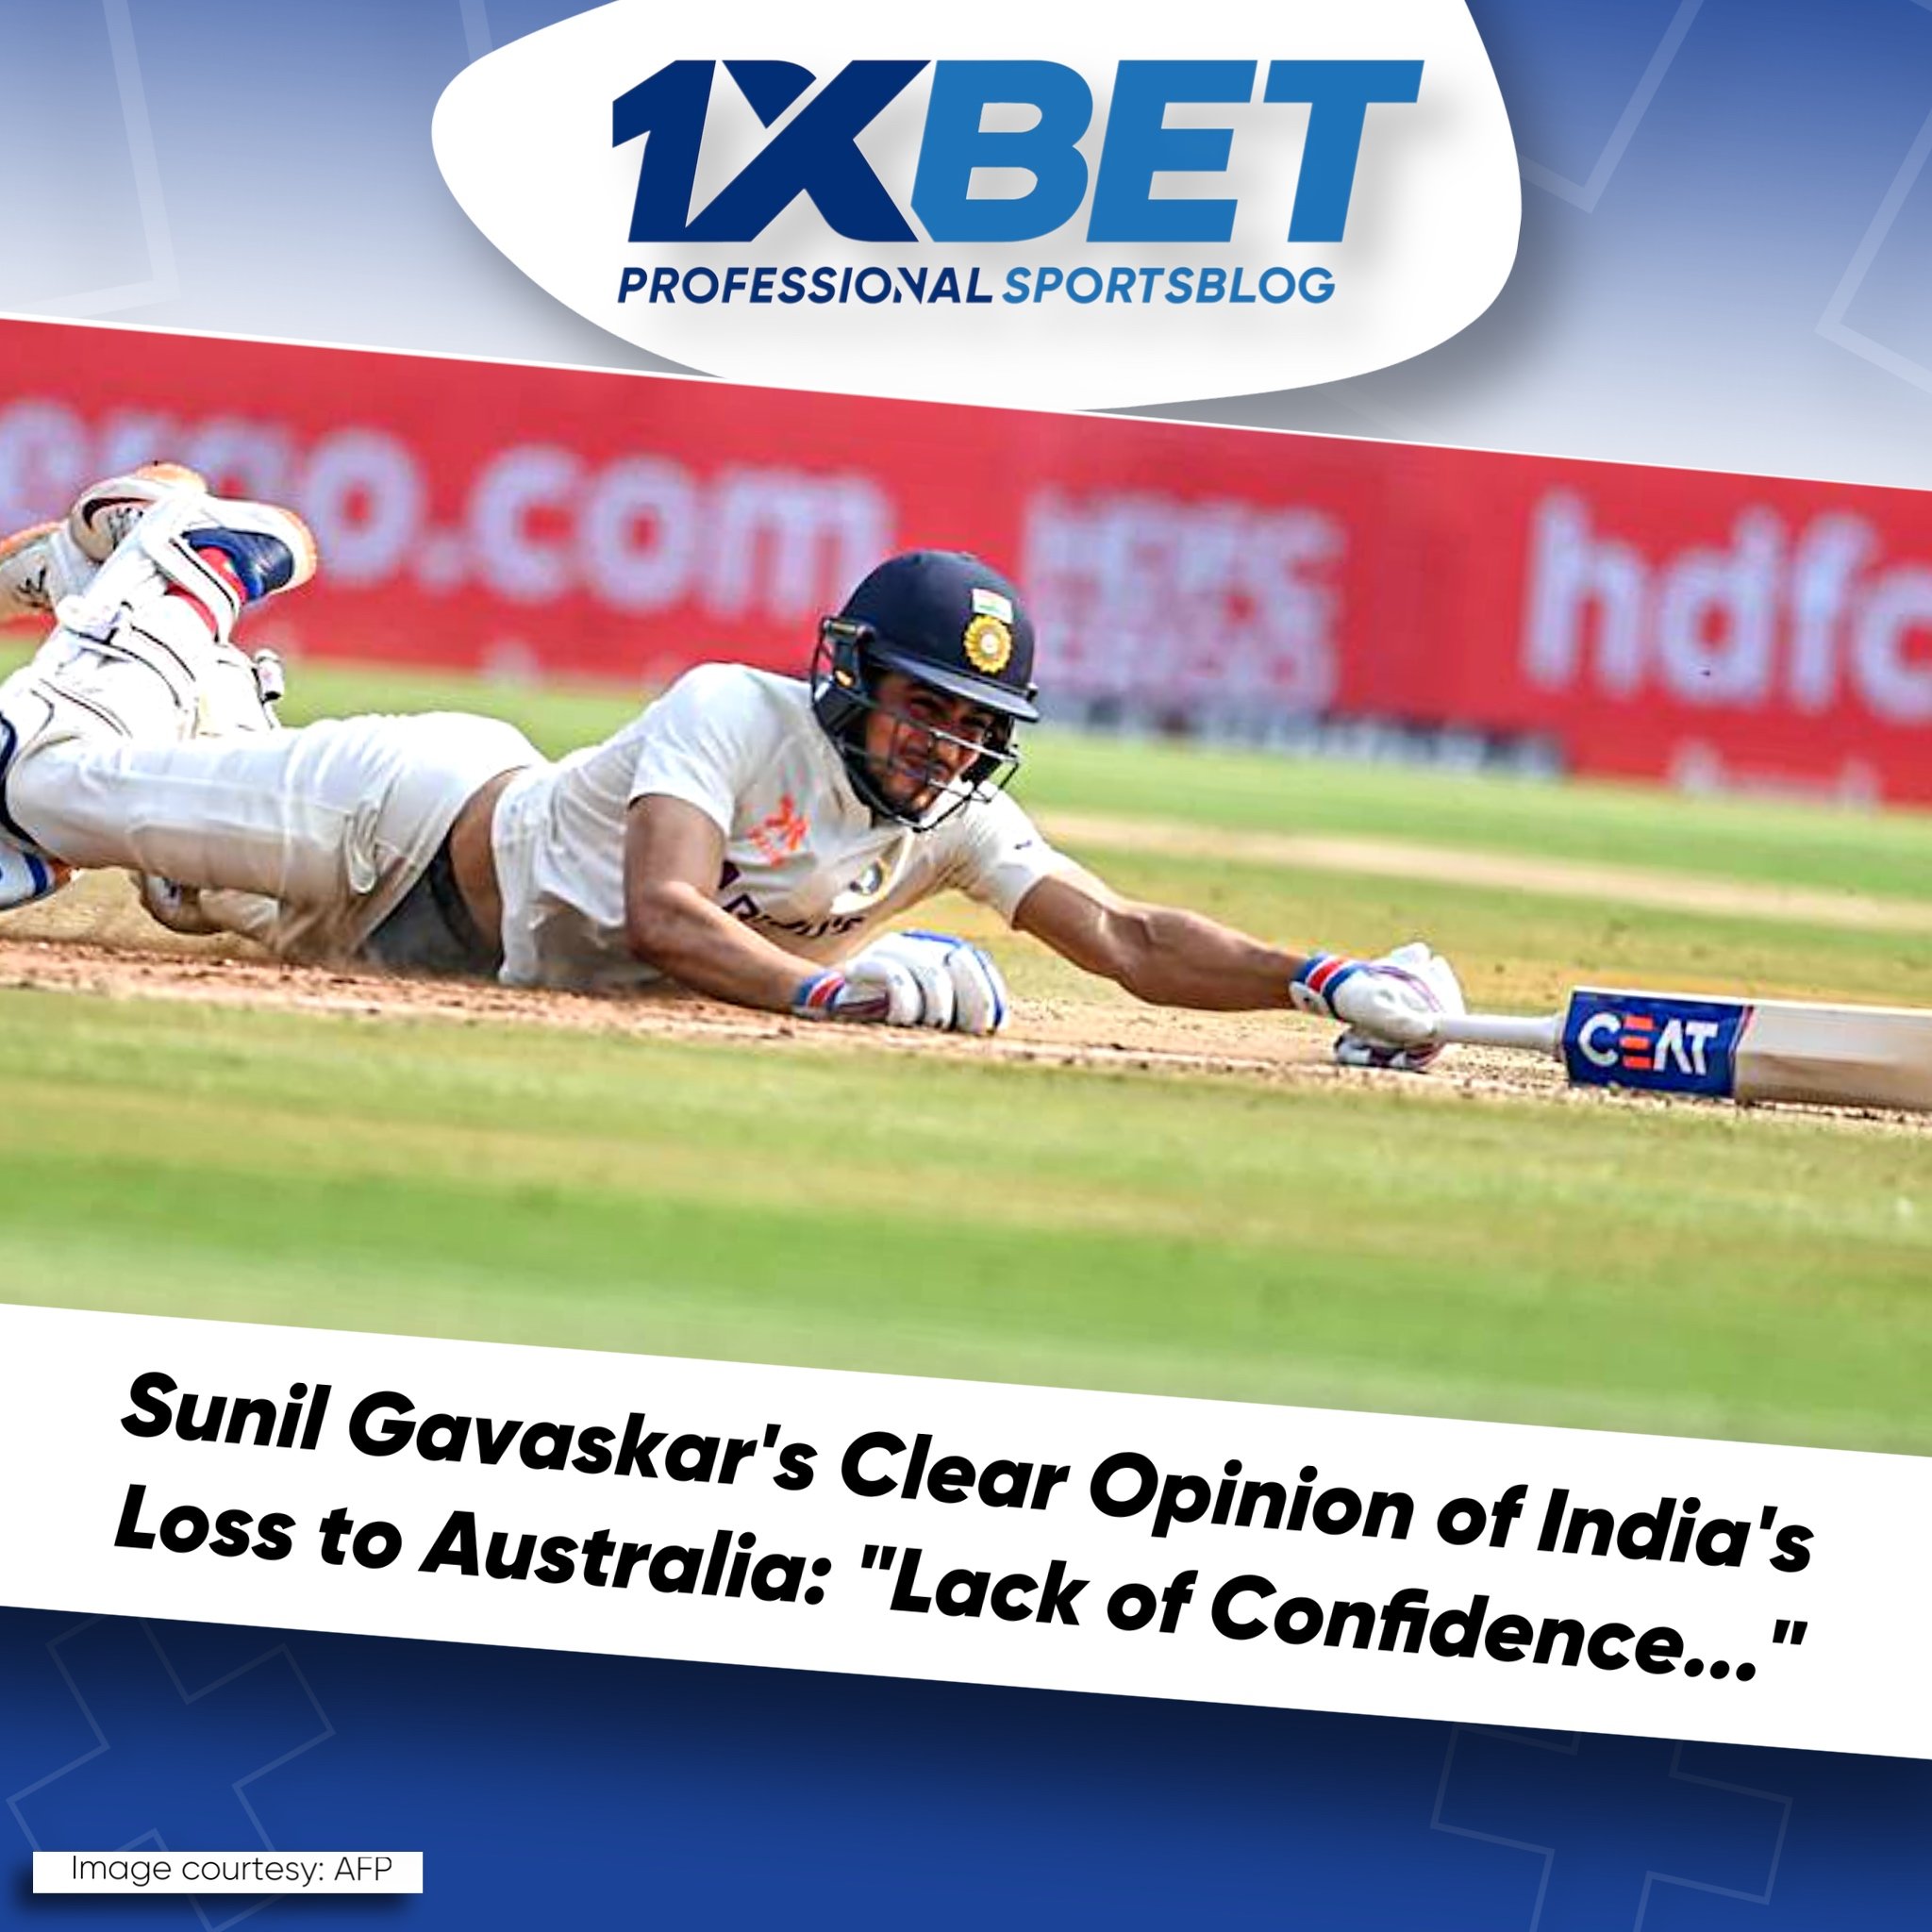 Sunil Gavaskar's Clear Opinion of India's Loss to Australia: "Lack of Confidence..."